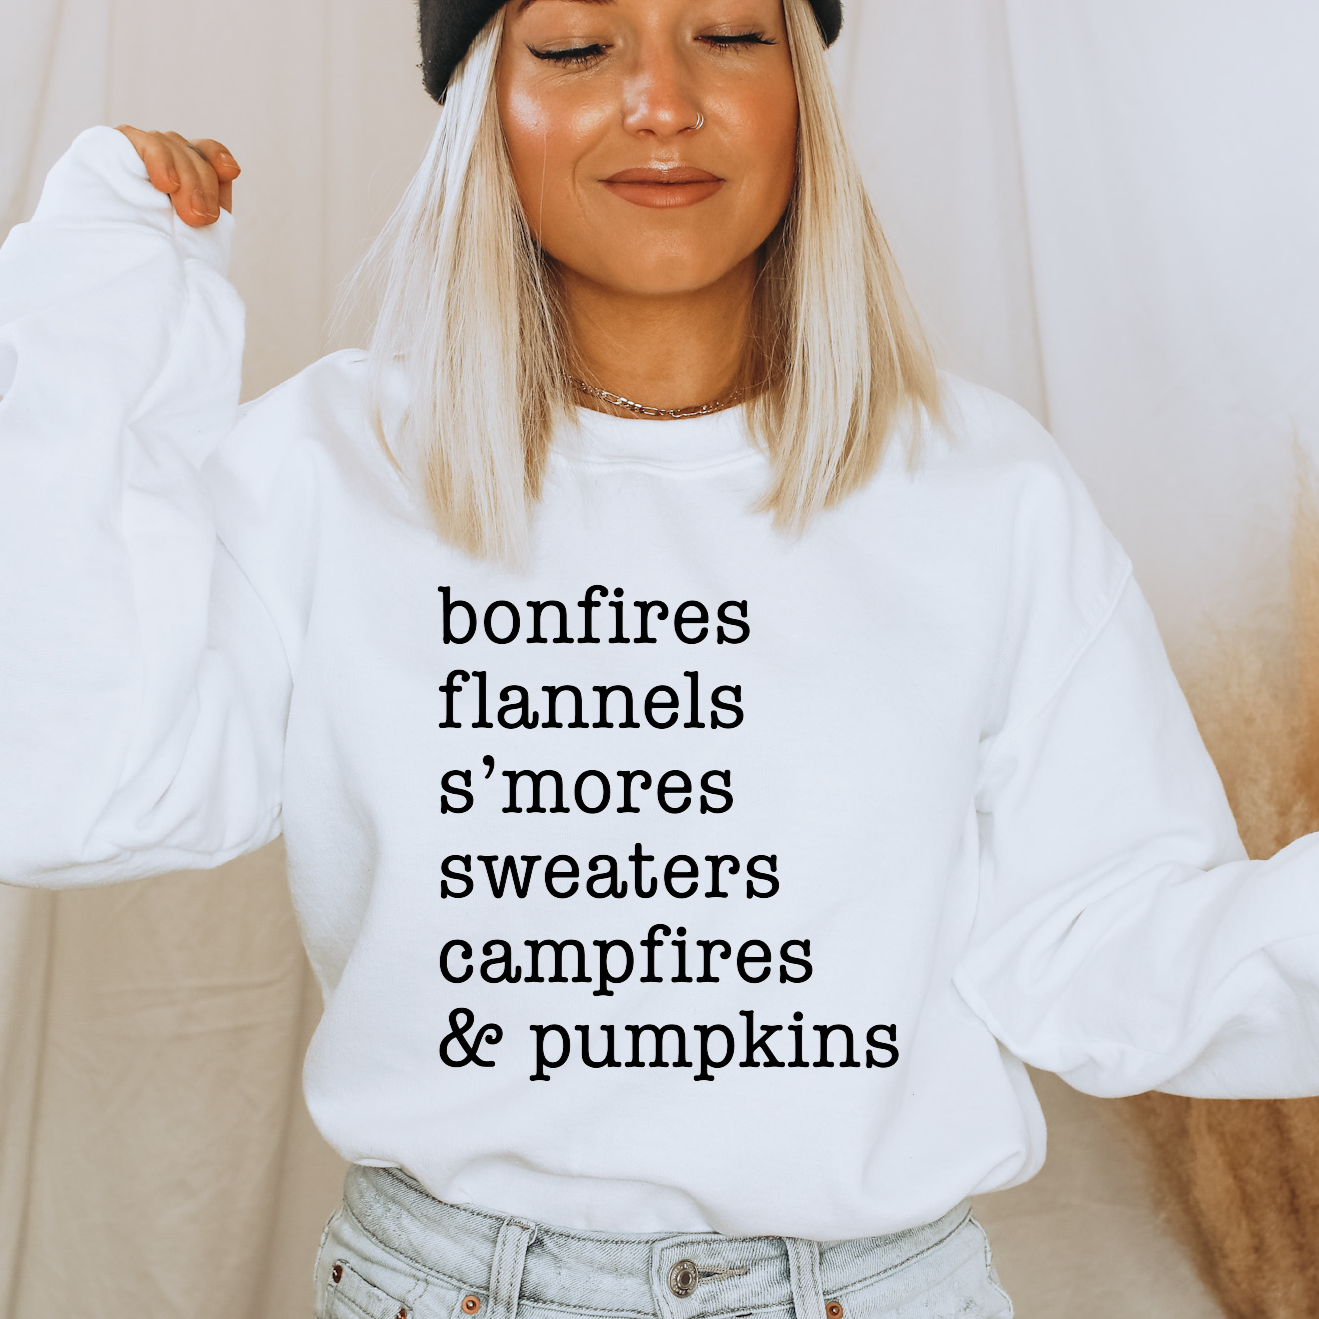 Bonfires Flannels Smores & Sweaters